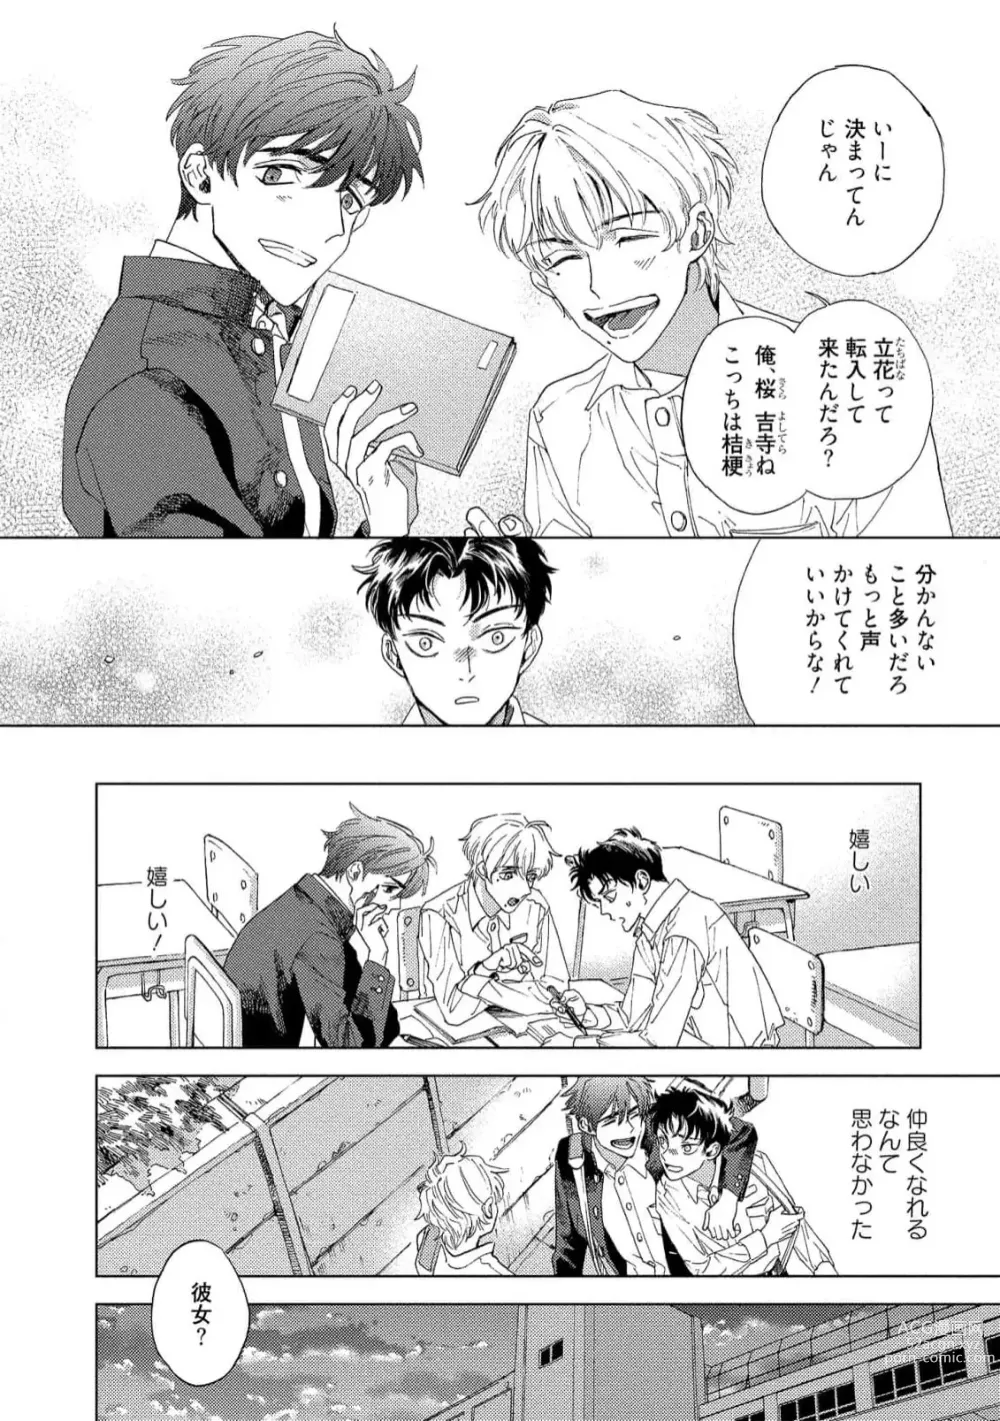 Page 10 of manga Fukushuu ga Tokenai